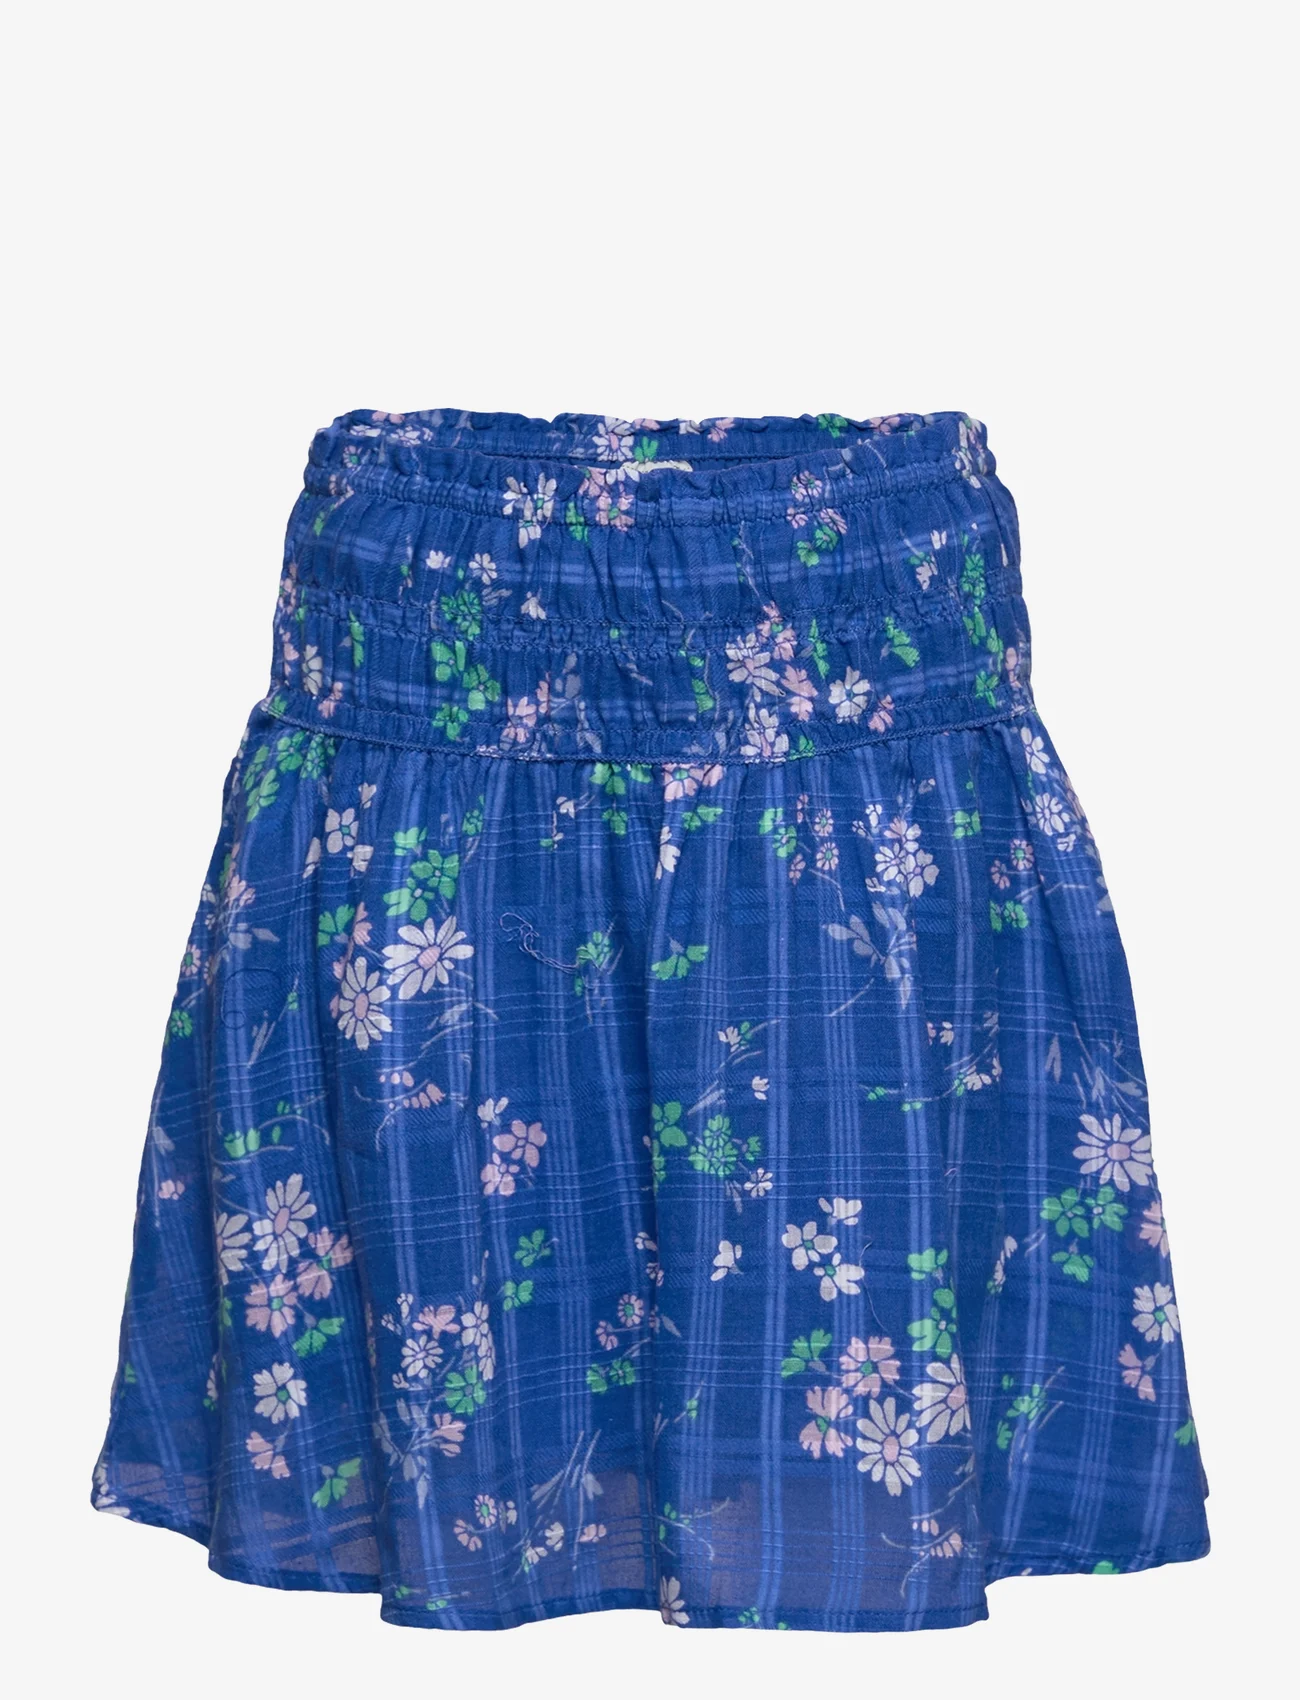 Abercrombie & Fitch - kids GIRLS SKIRTS - kurze röcke - blue floral - 0